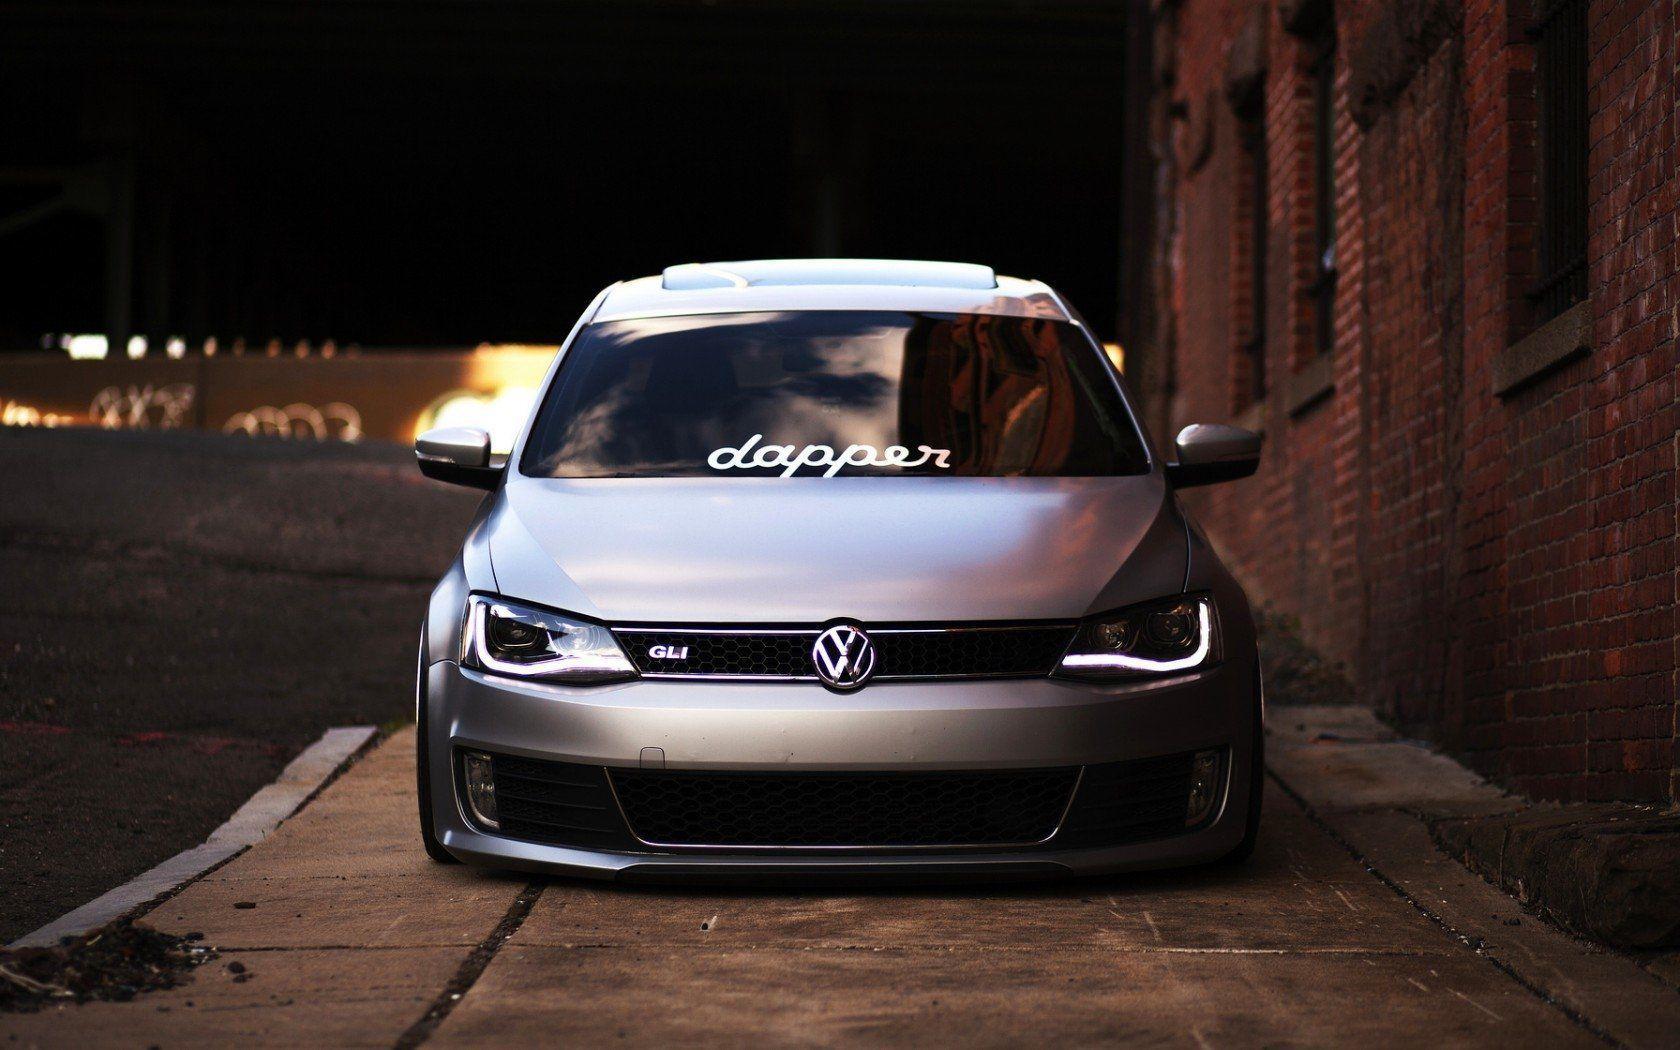 Volkswagen Golf HD Wallpaper and Background Image